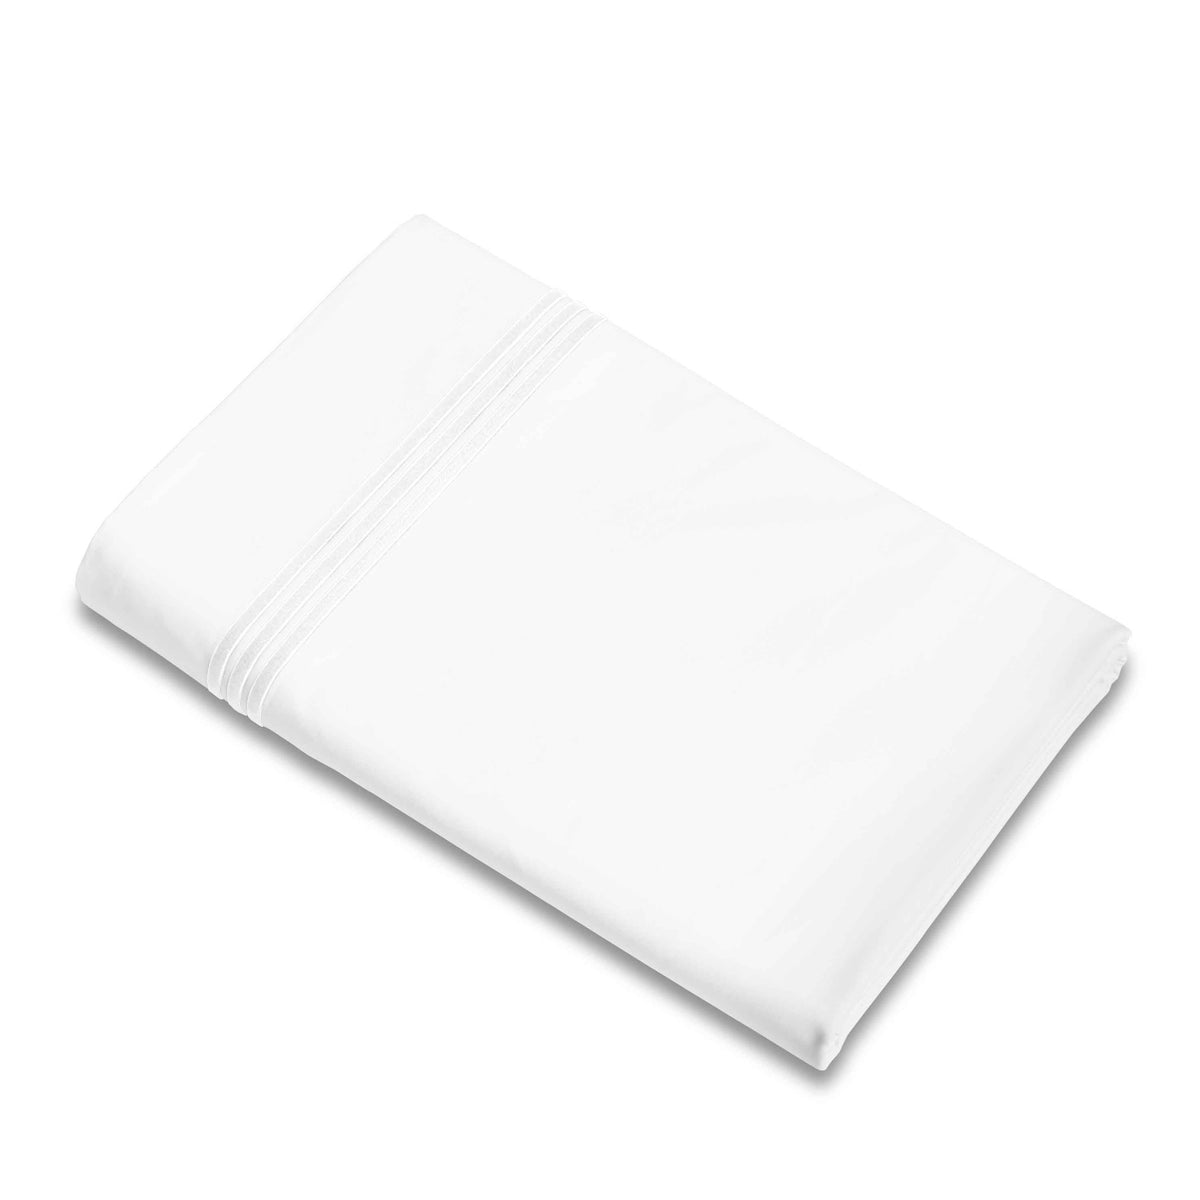 Flat Sheet of Signoria Platinum Percale Bedding in White/White Color